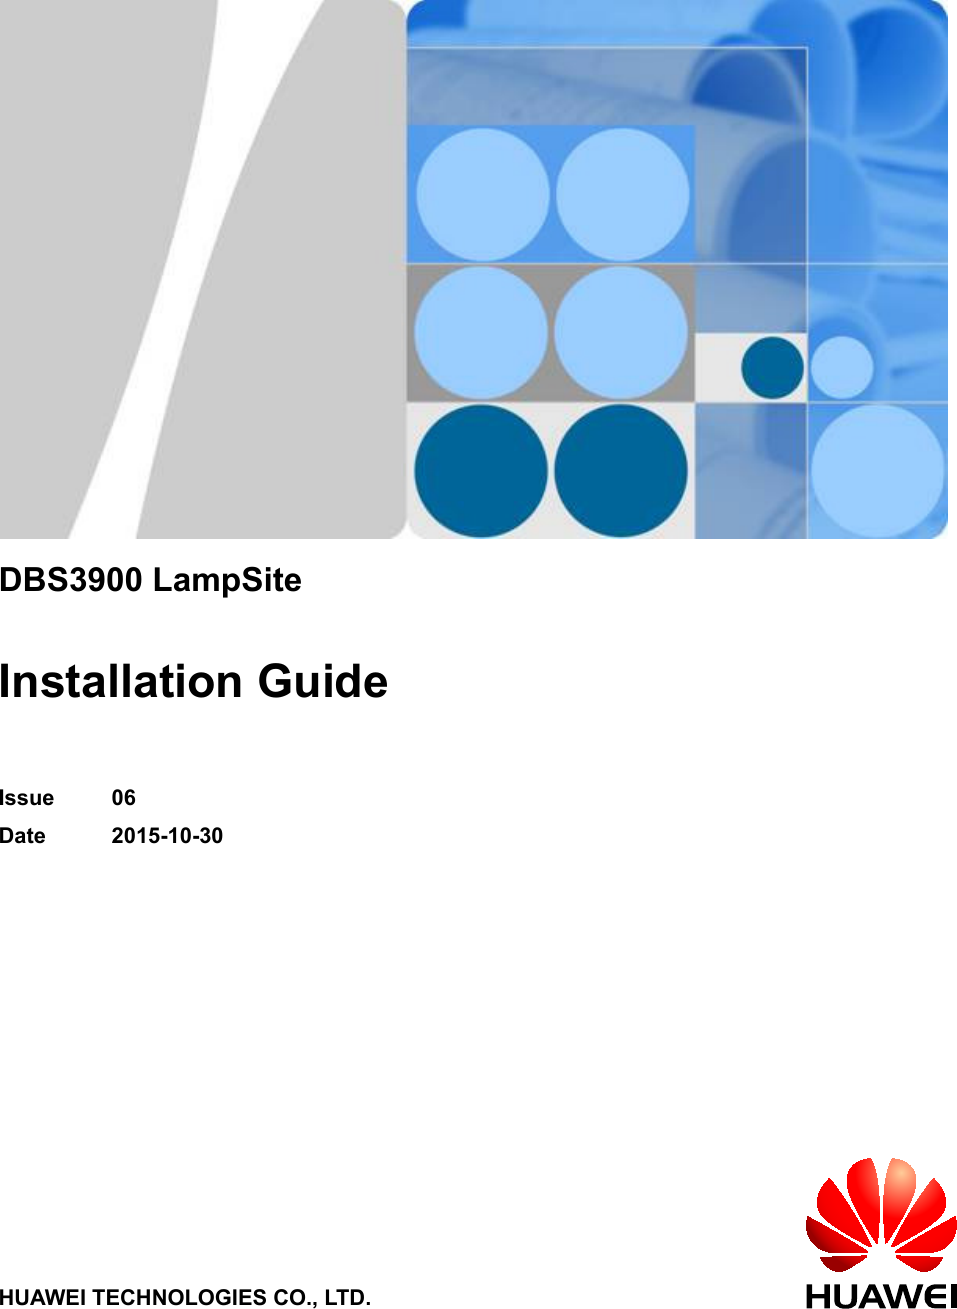 DBS3900 LampSiteInstallation GuideIssue 06Date 2015-10-30HUAWEI TECHNOLOGIES CO., LTD.